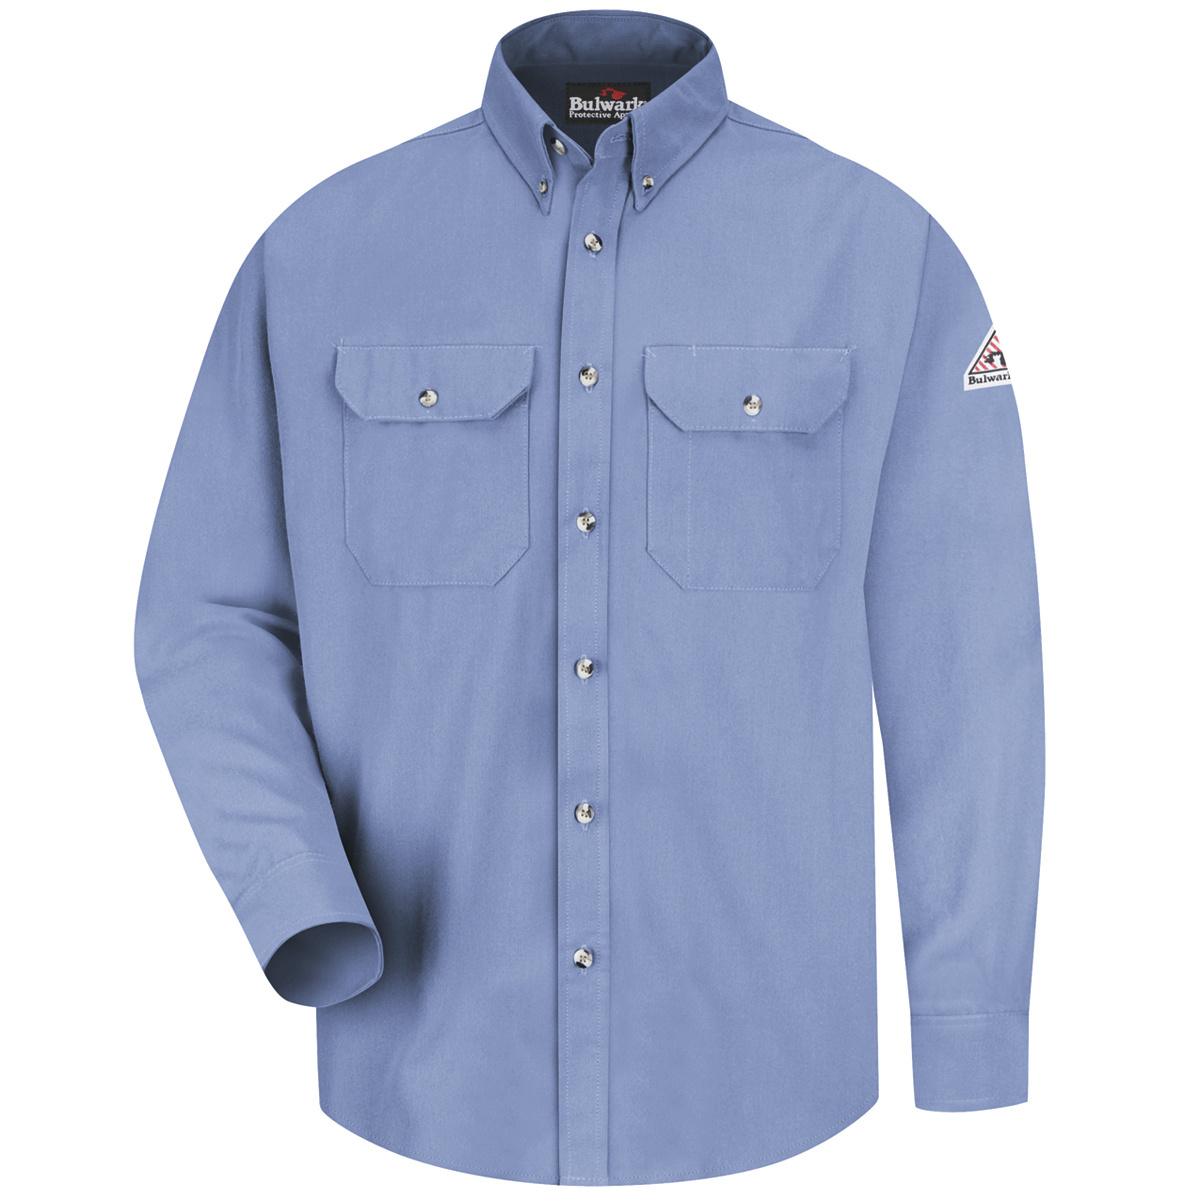 Bulwark® X-Large Tall Light Blue Modacrylic/Lyocell/Aramid Flame Resistant Dress Uniform Shirt With Button Front Closure